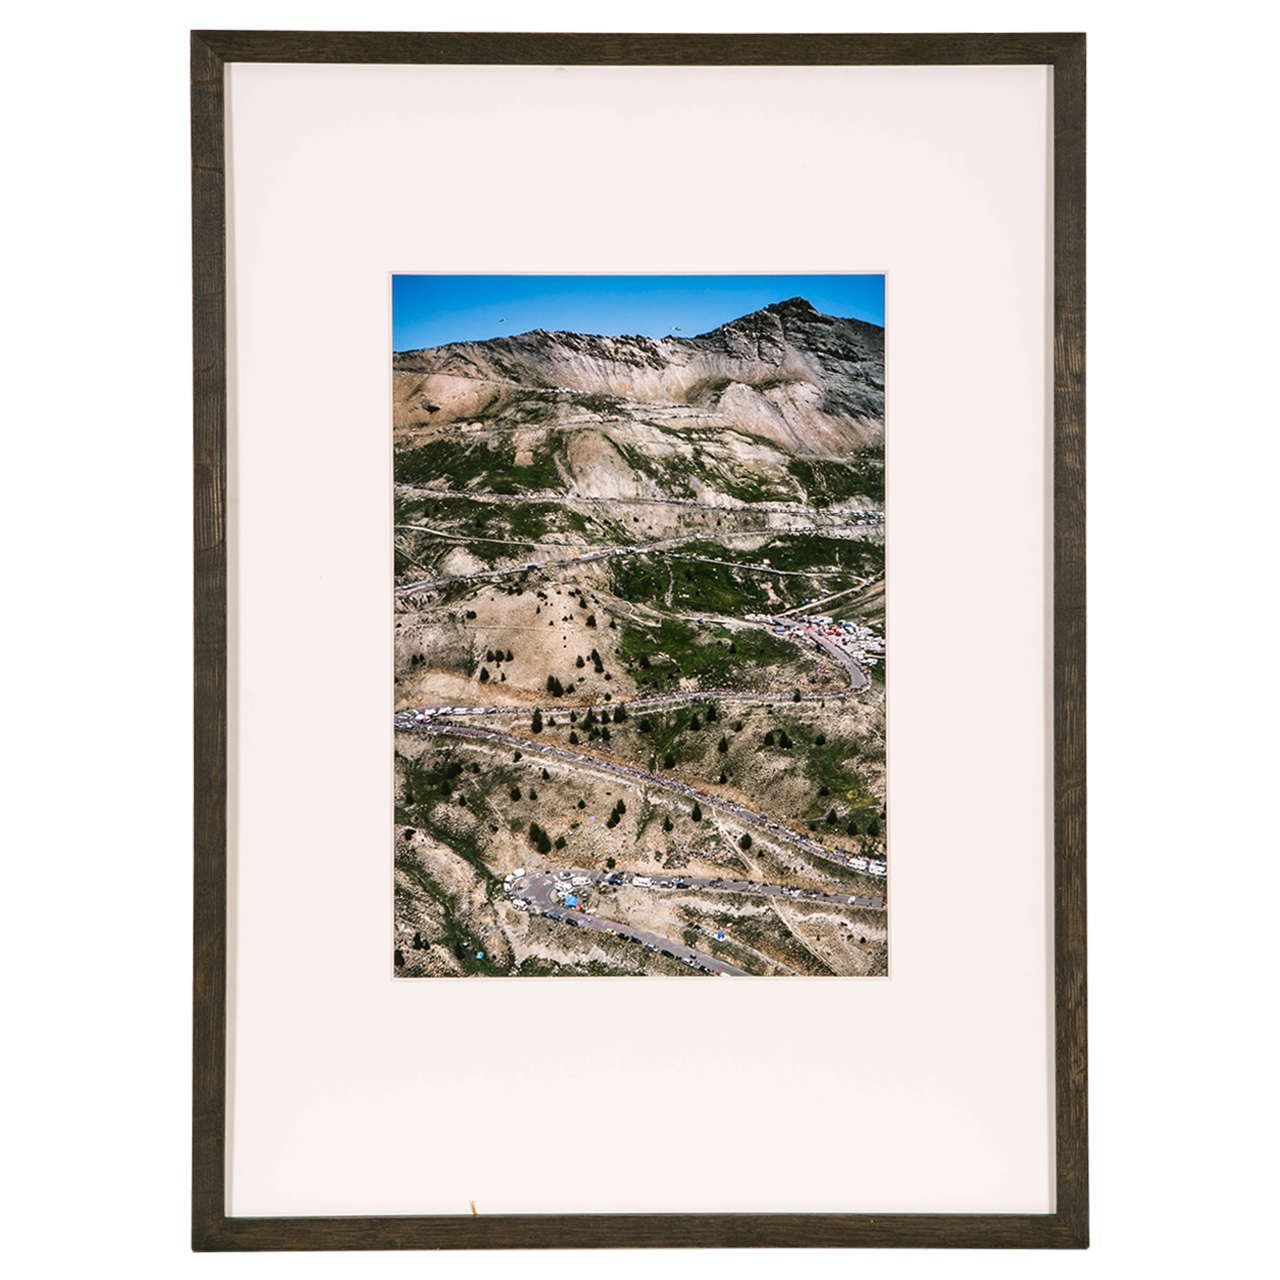 C-print 'Tour de France' by Andreas Gursky For Sale